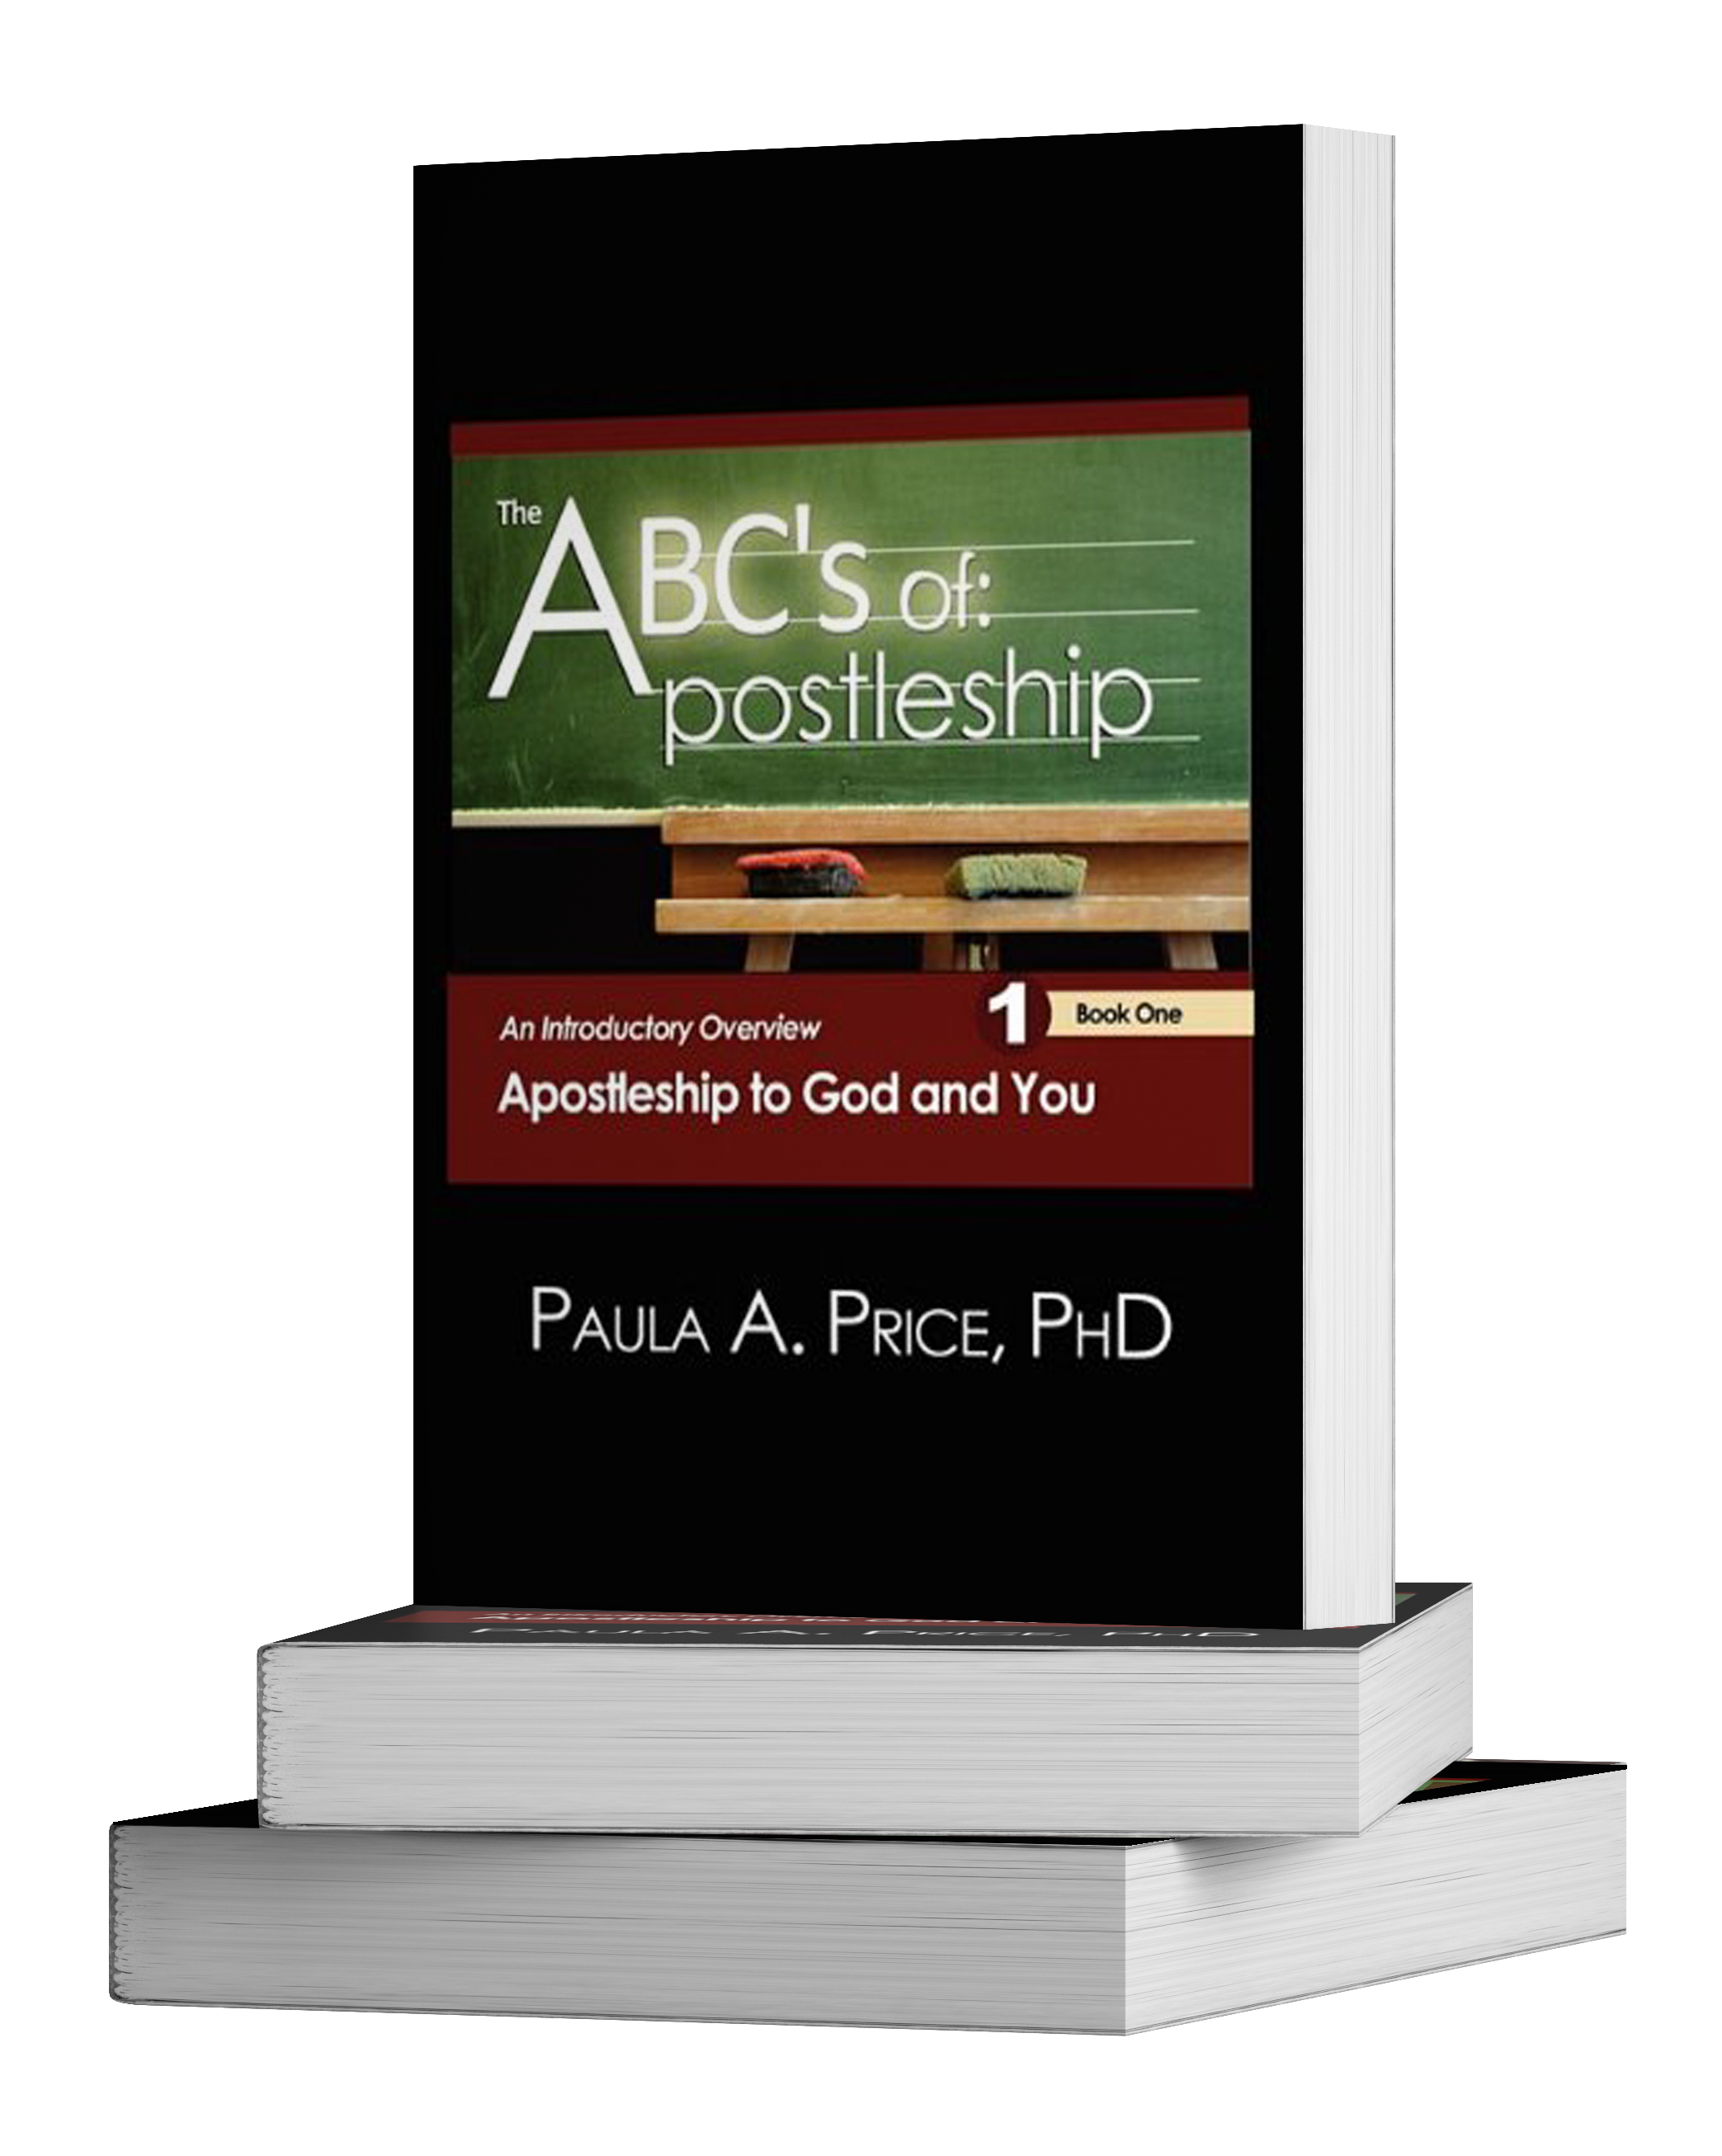 ADCs of Apostleship 1